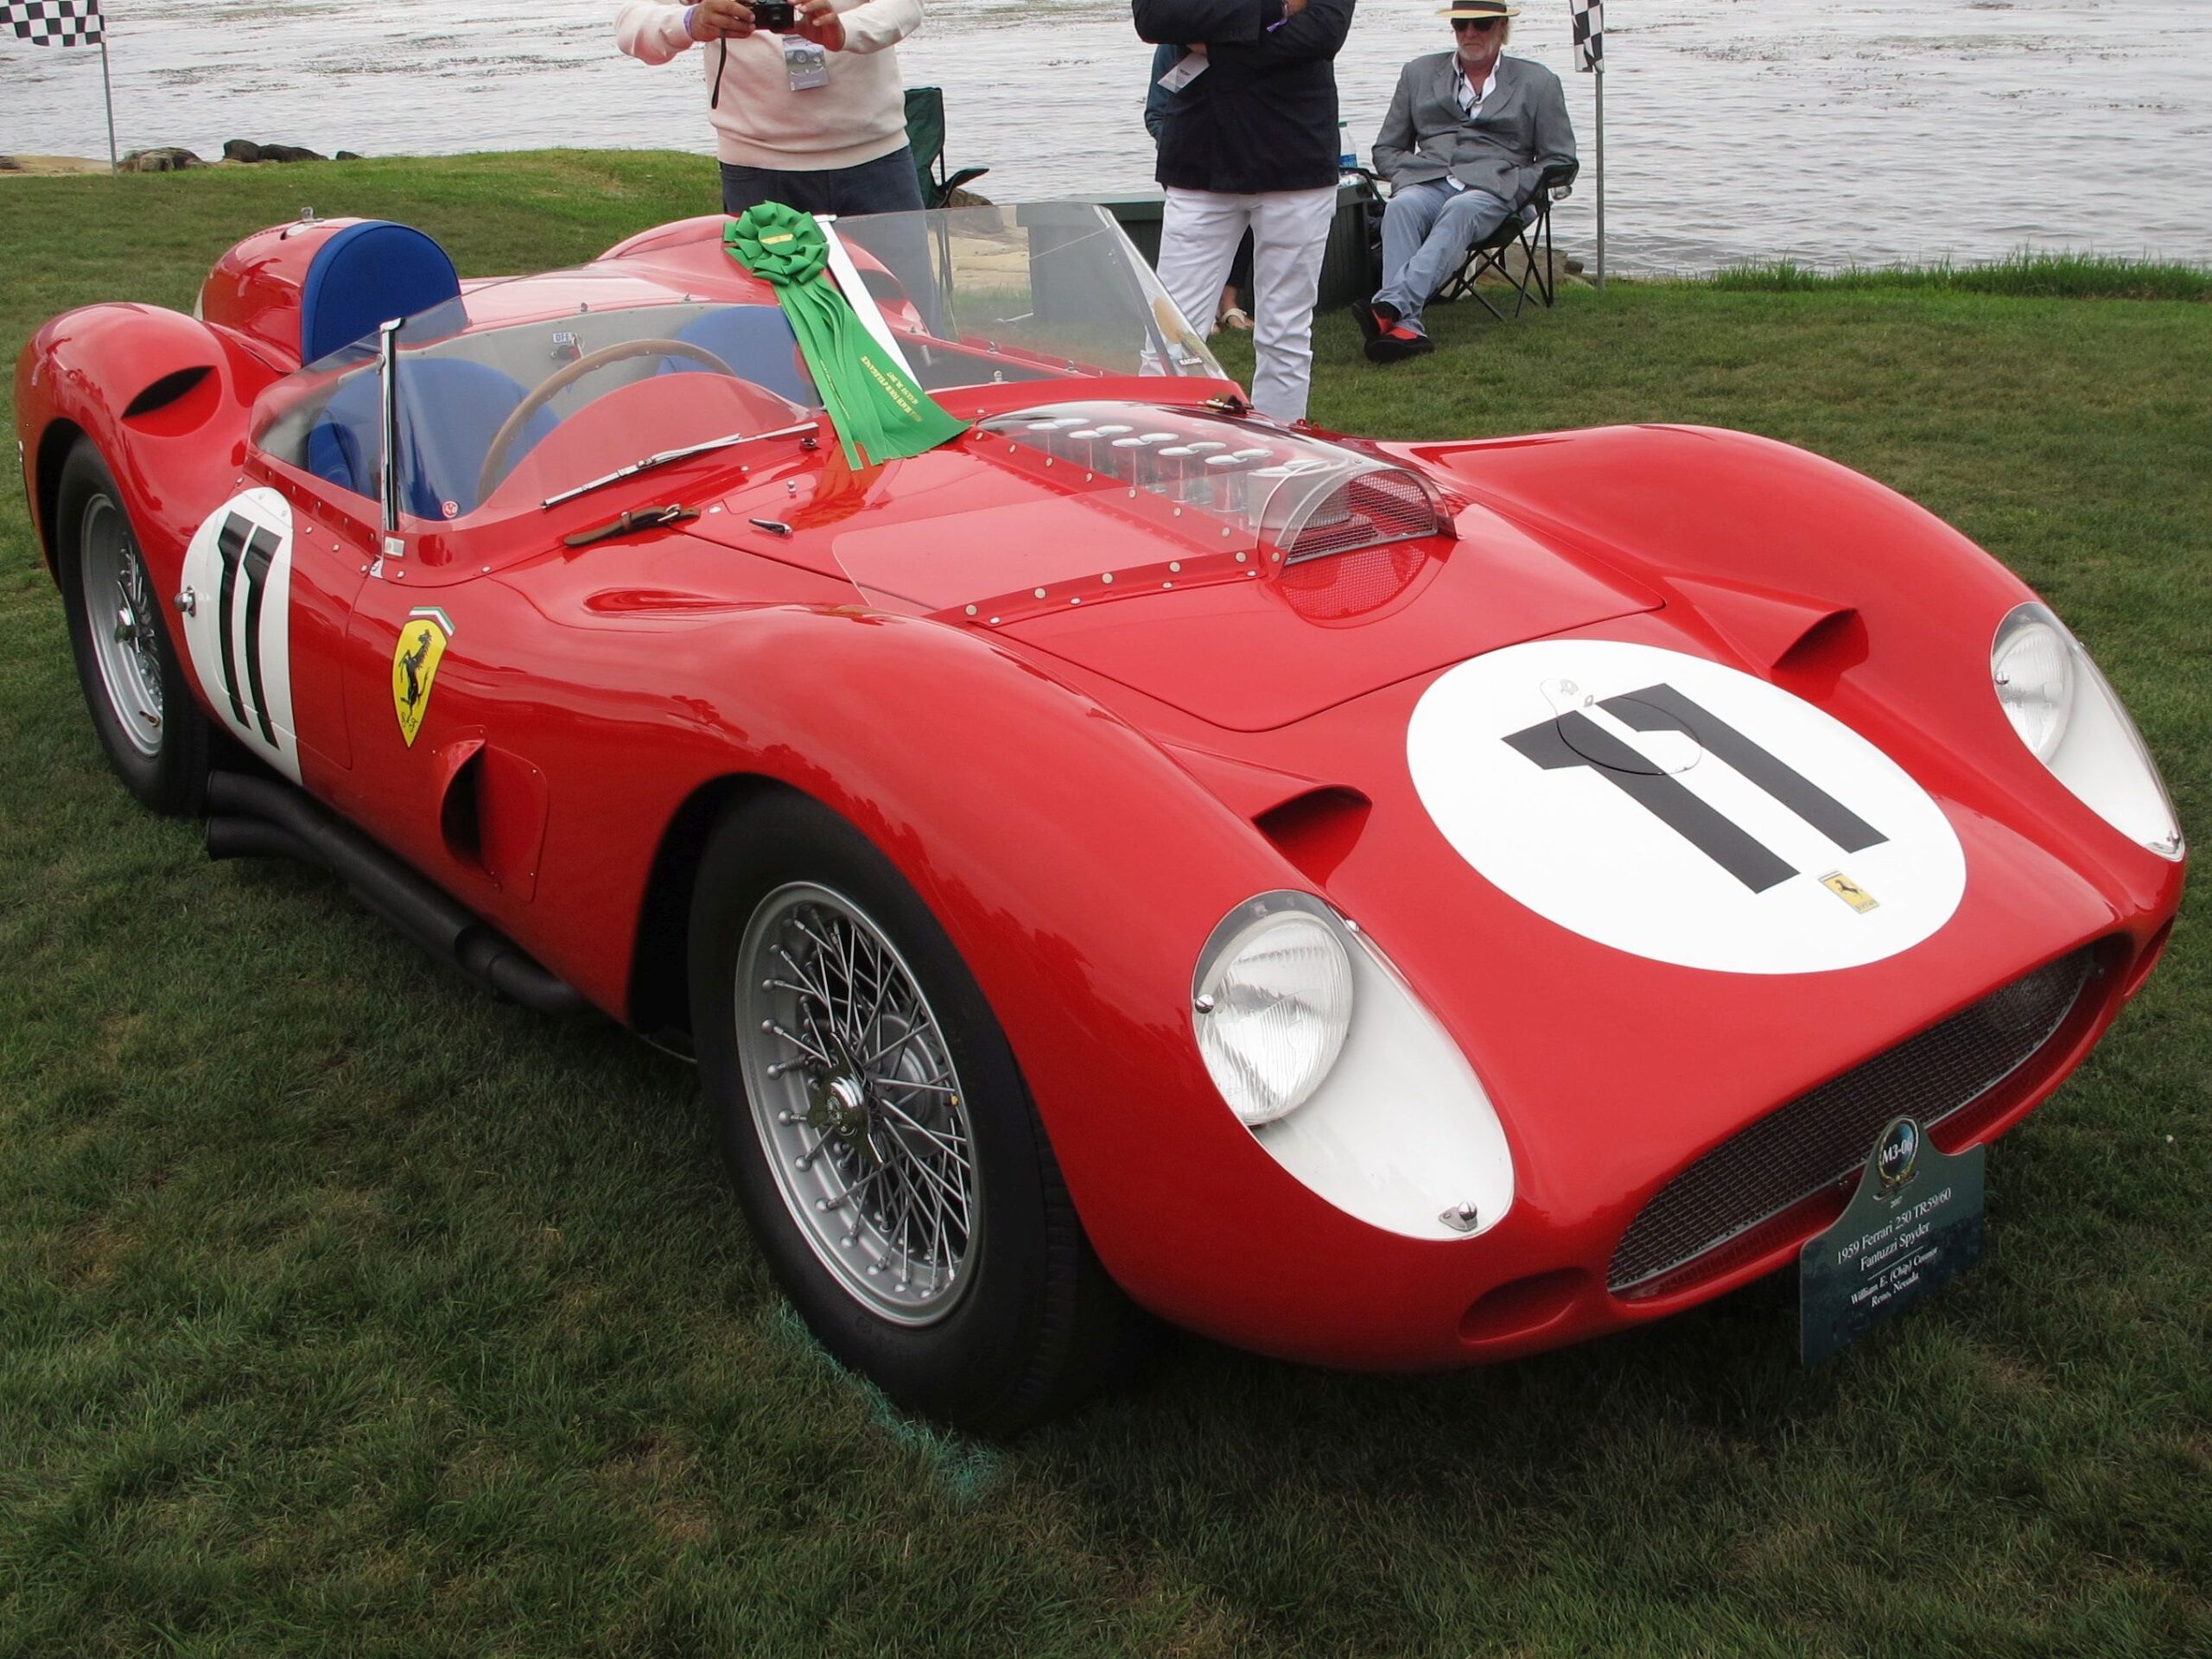 Ferrari 250 Testa Rossa ($16.4 million) Most Expensive Cars In The World